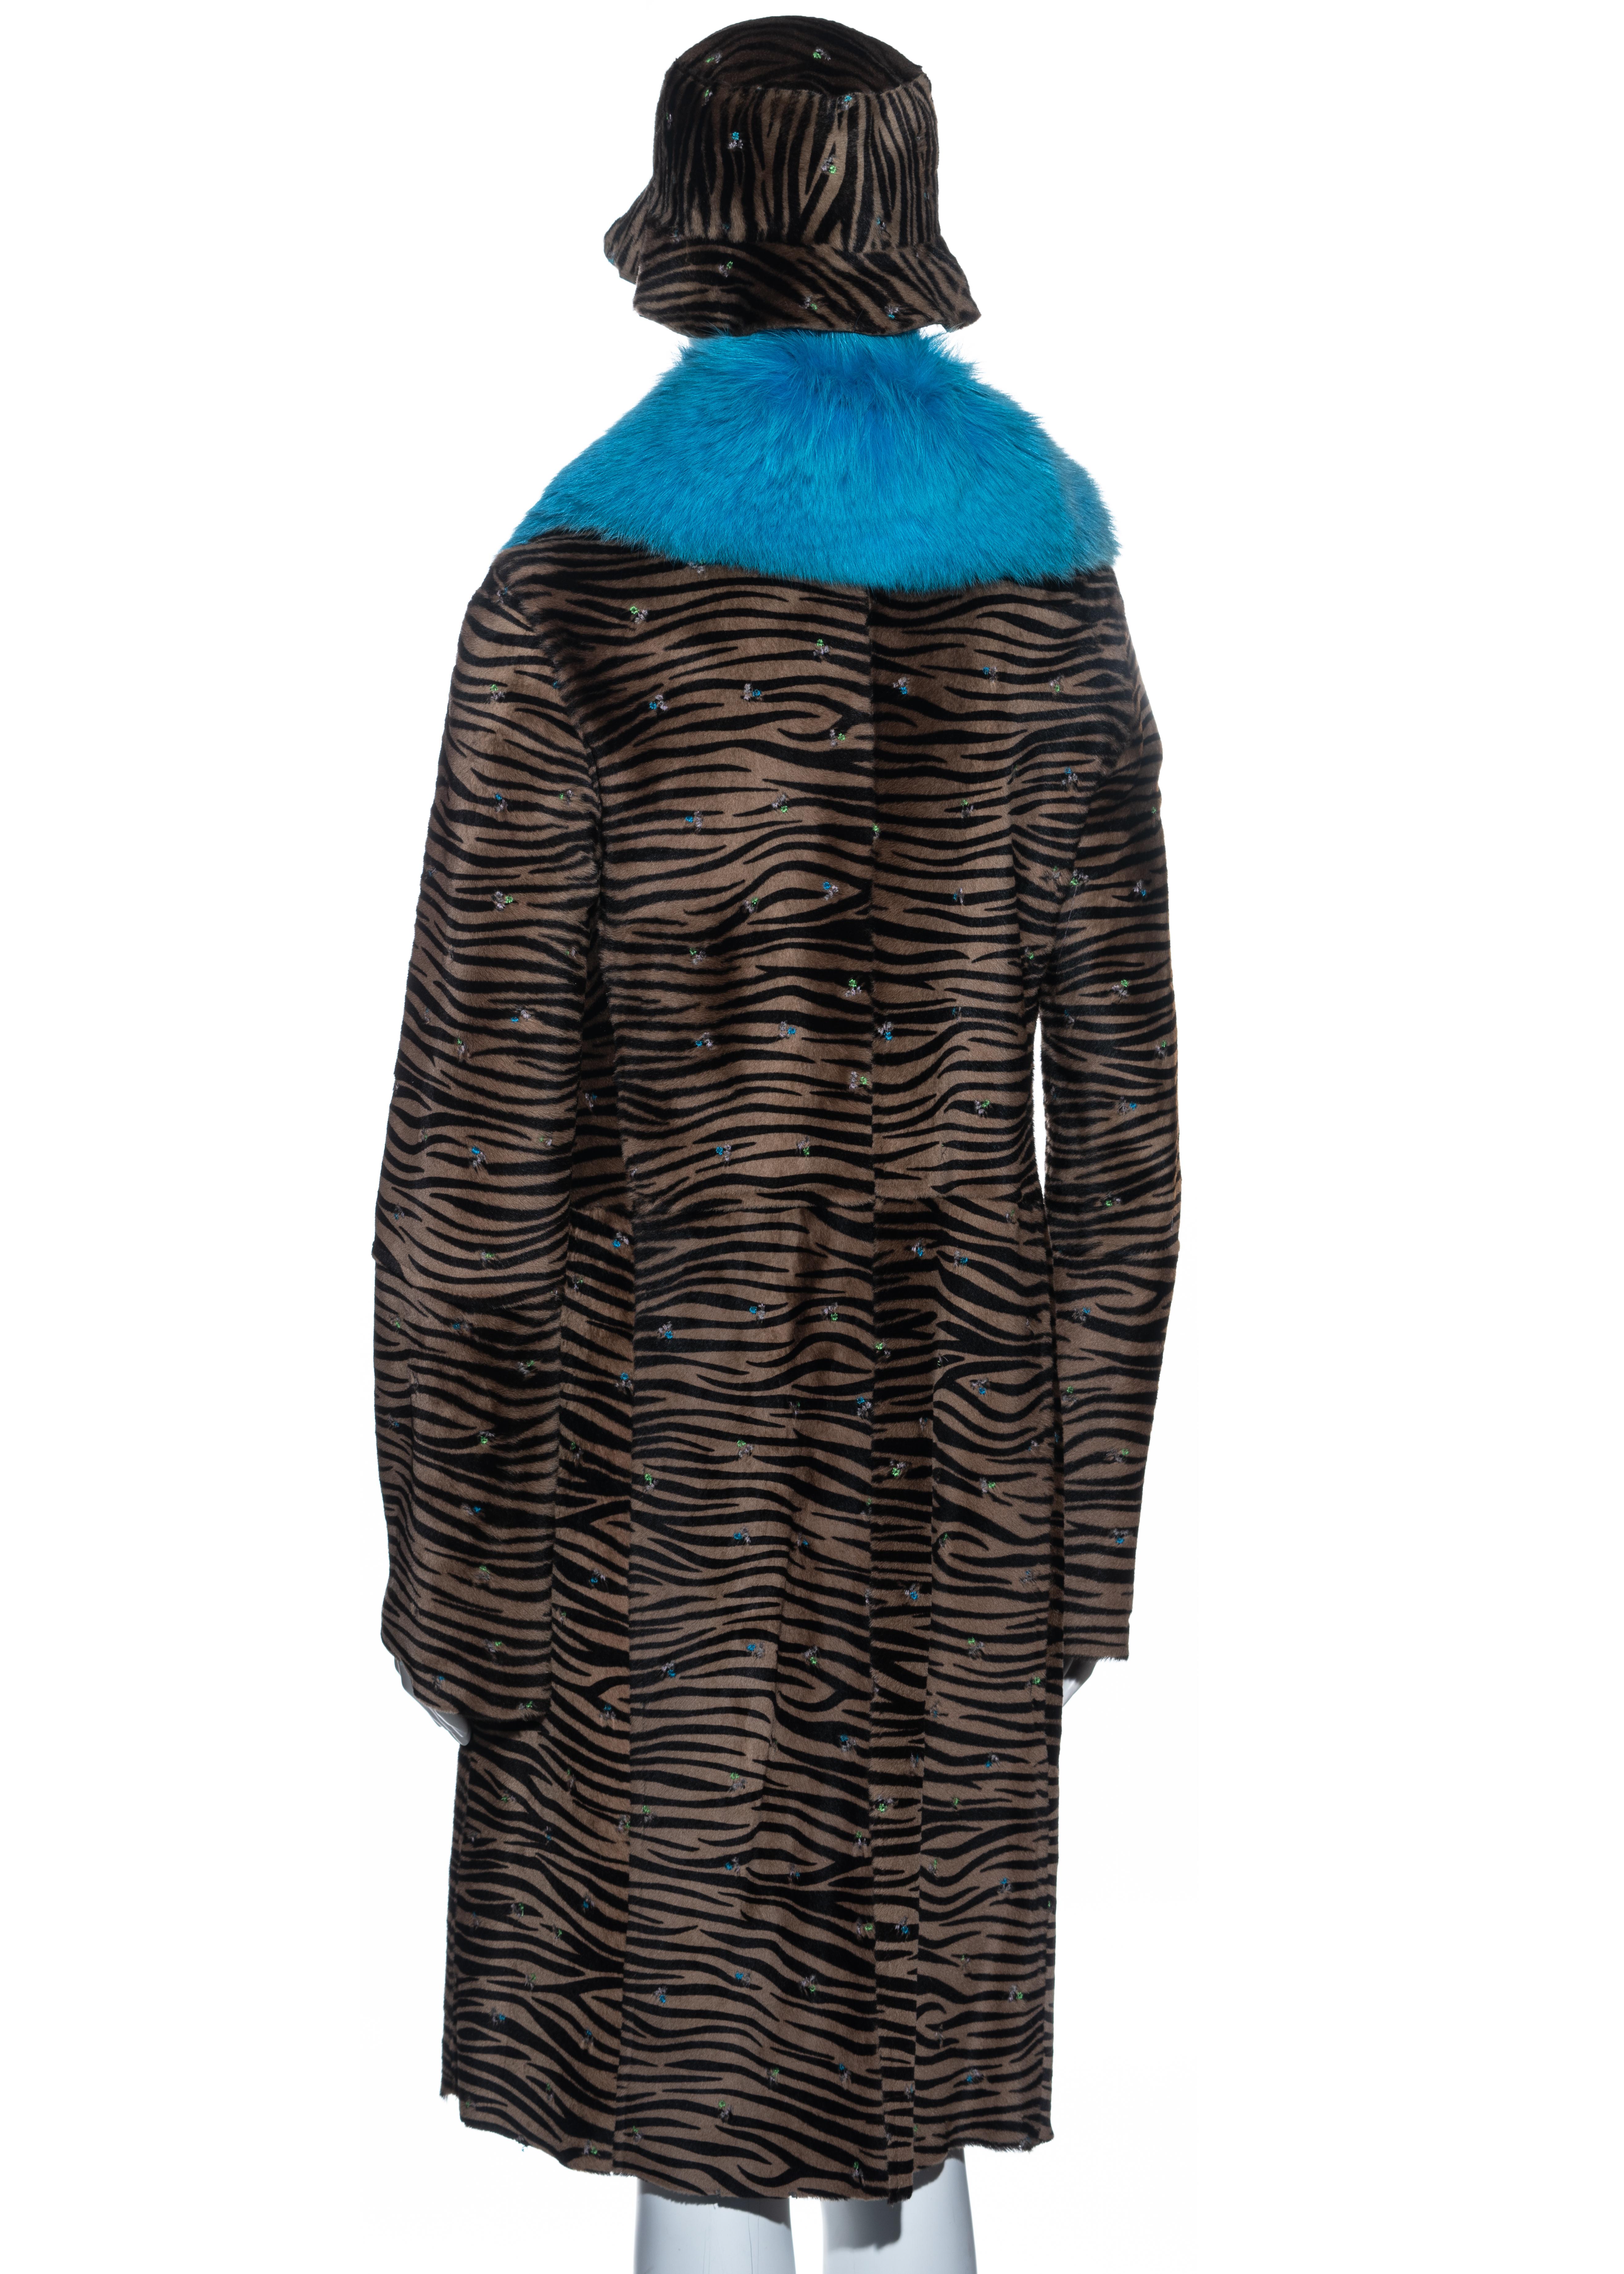 Women's Gianni Versace zebra print pony hair coat with fox fur and bucket hat, fw 1999